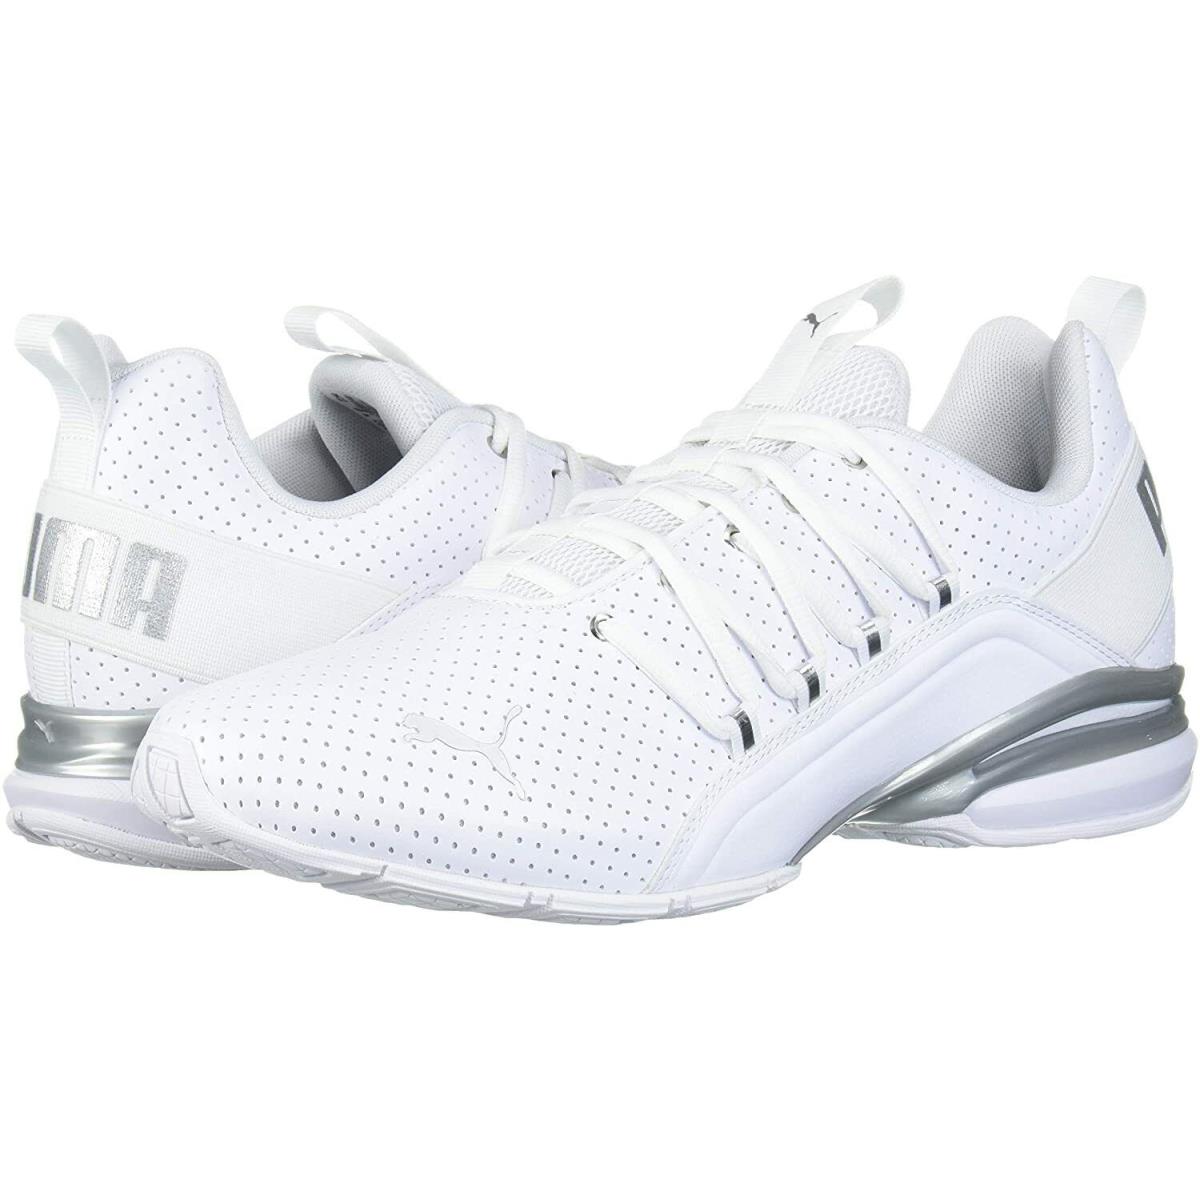 Men`s Shoes Puma Axelion Perf Athletic Training Sneakers 19355501 White / Silver - White